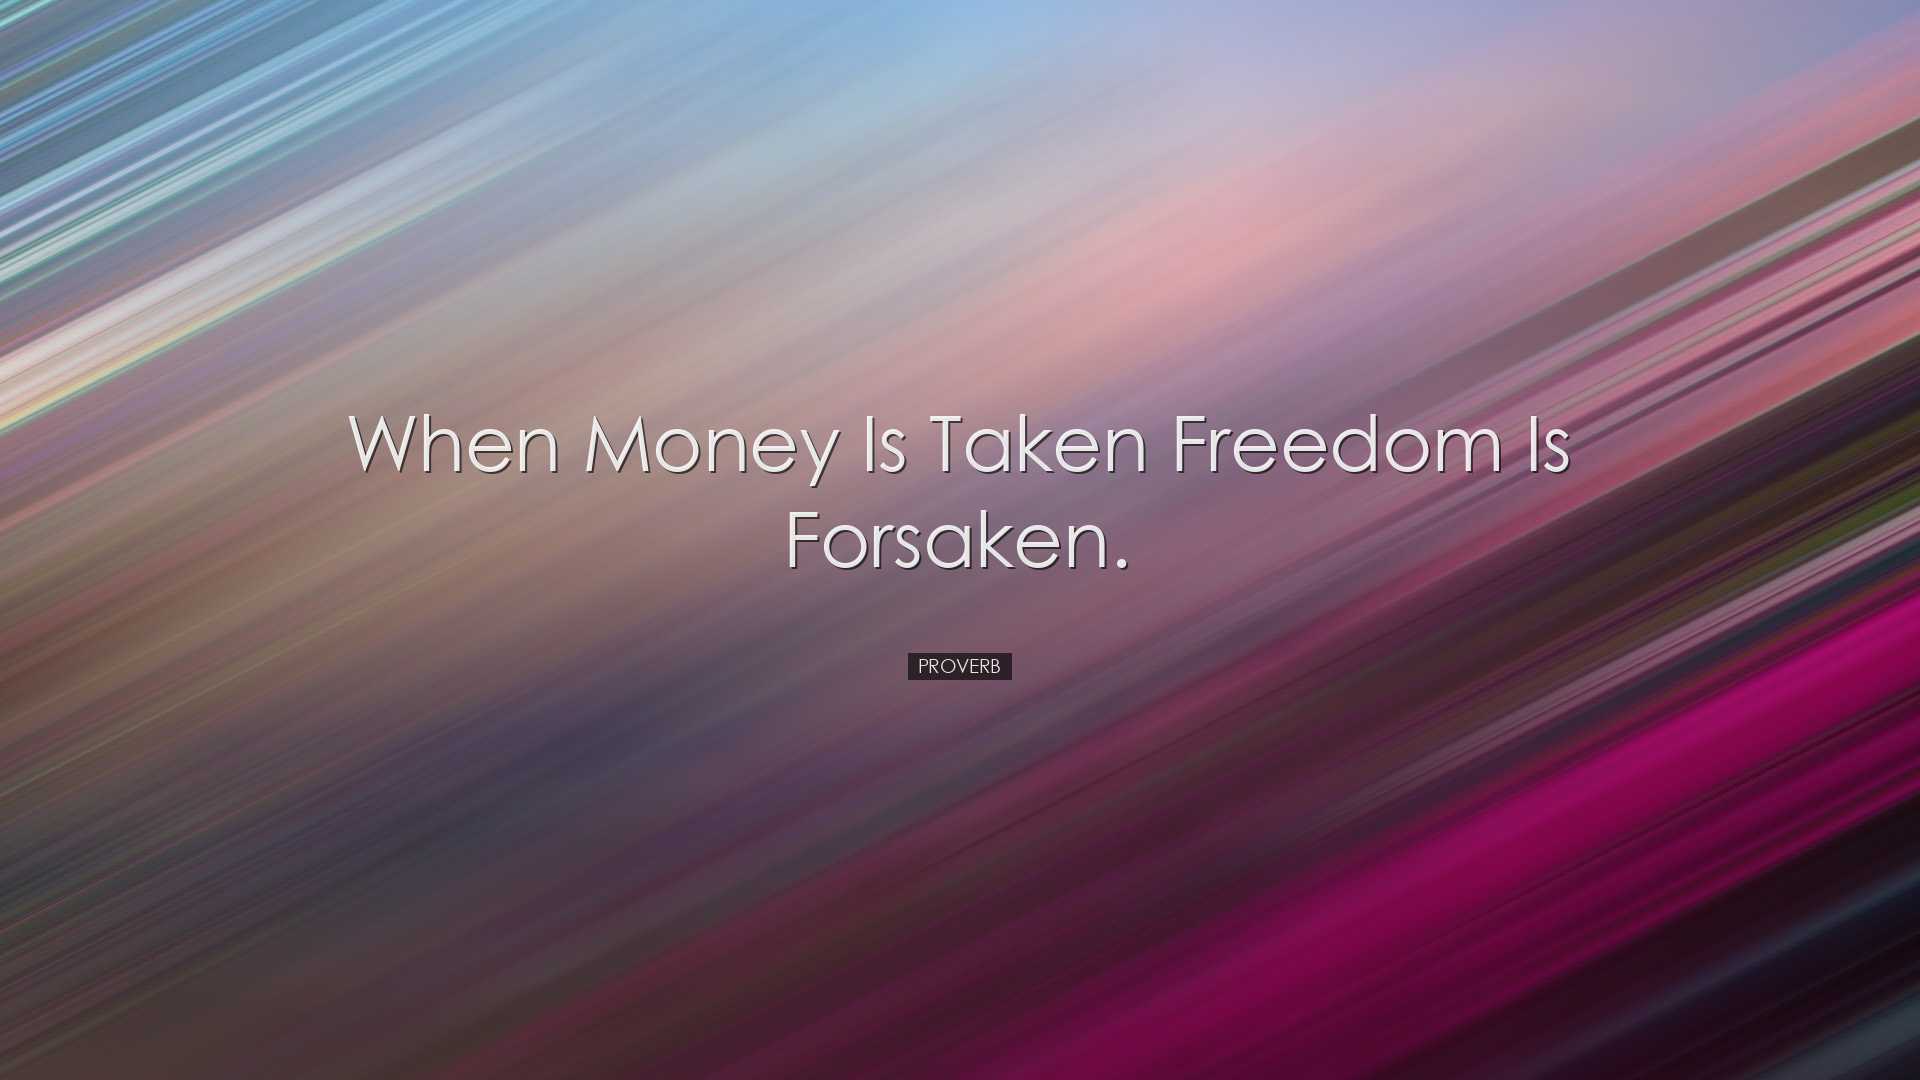 When money is taken freedom is forsaken. - Proverb